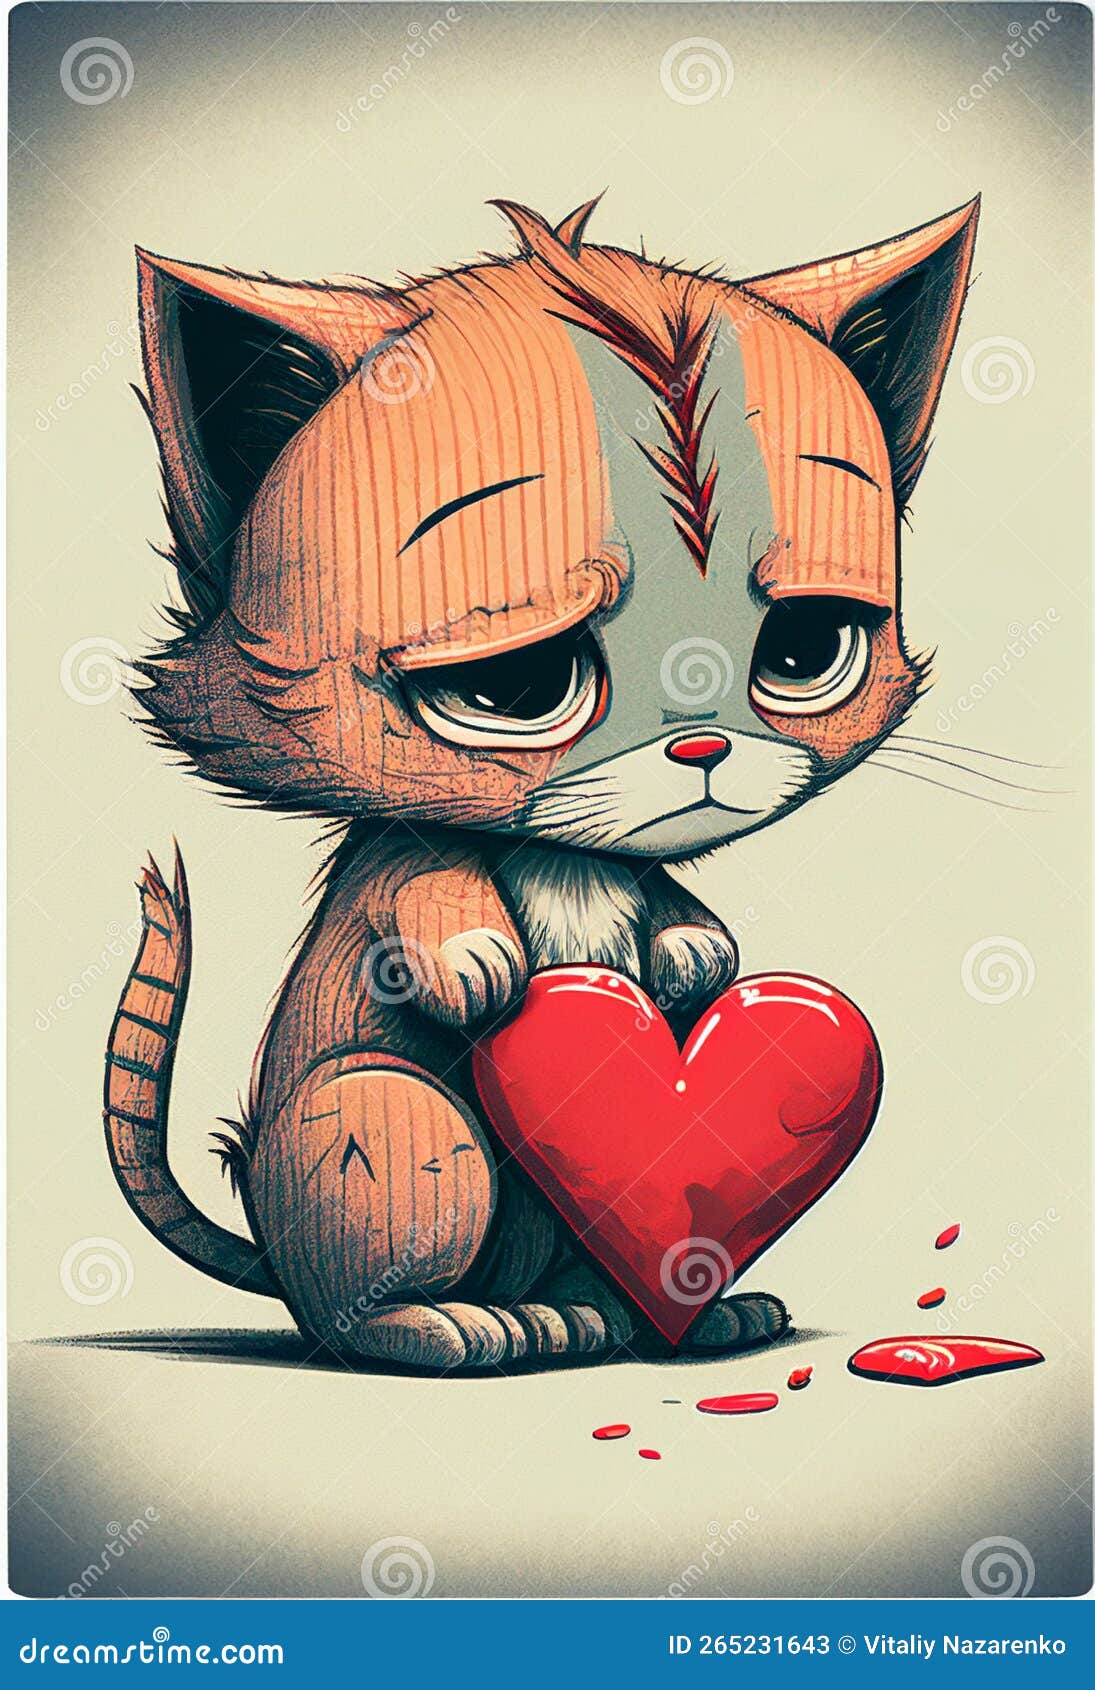 Sad Broken Heart Cartoon Stock Photos - Free & Royalty-Free Stock Photos  from Dreamstime